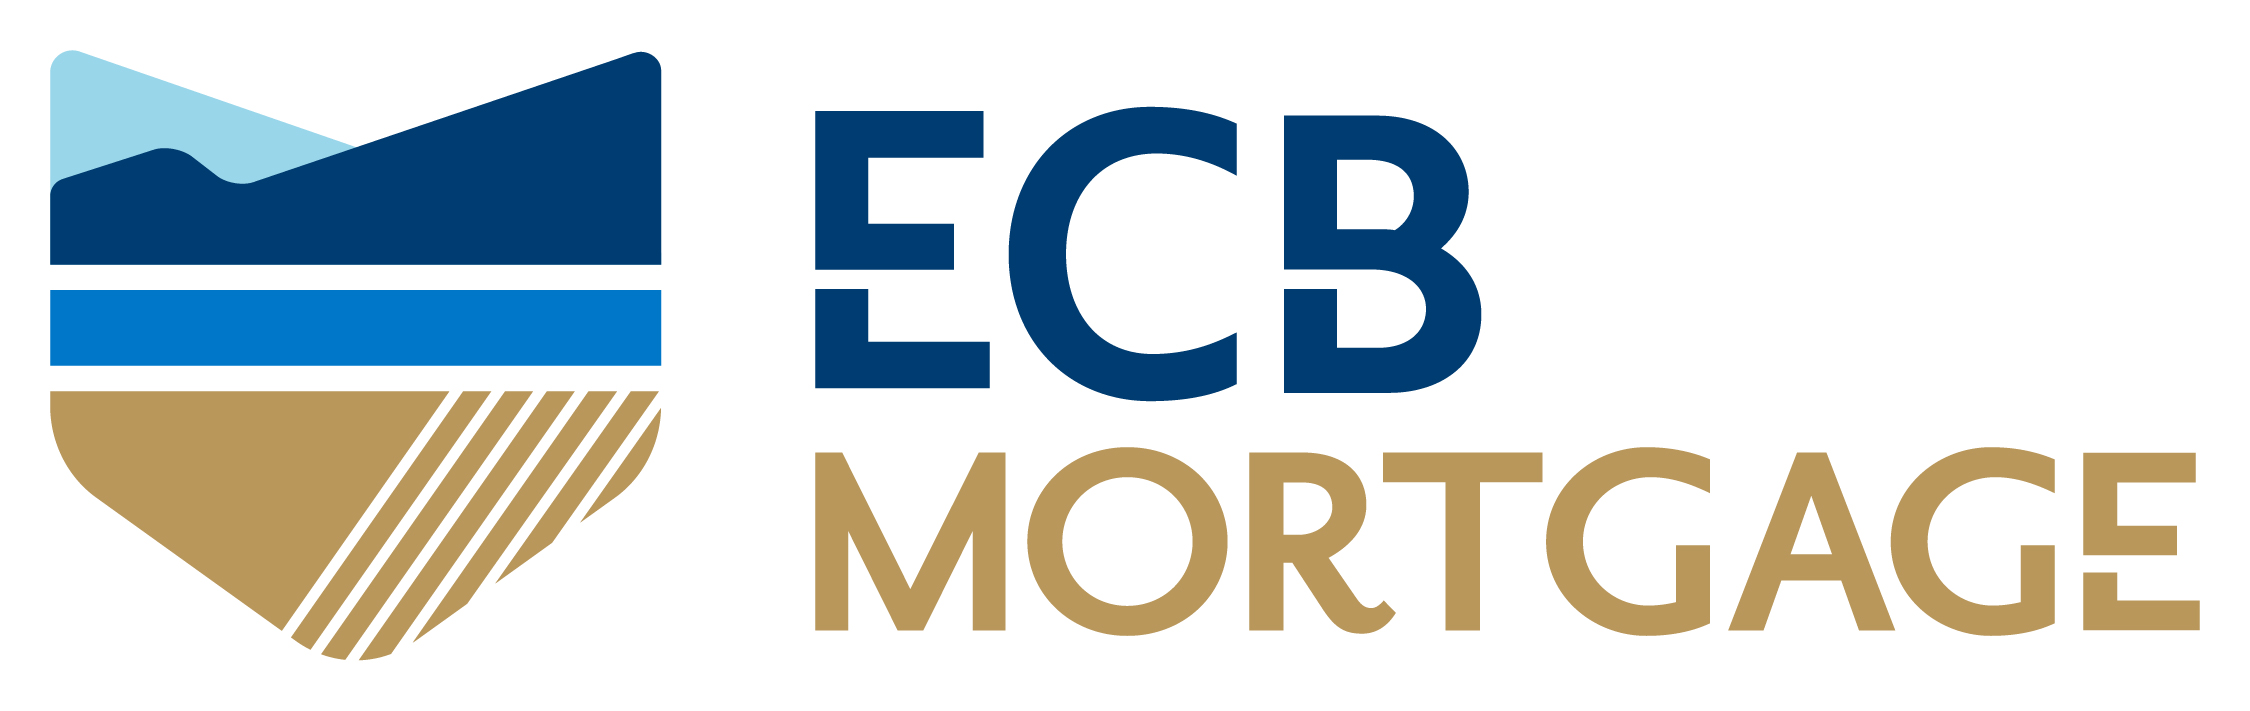 Eastern Mortgage Logo